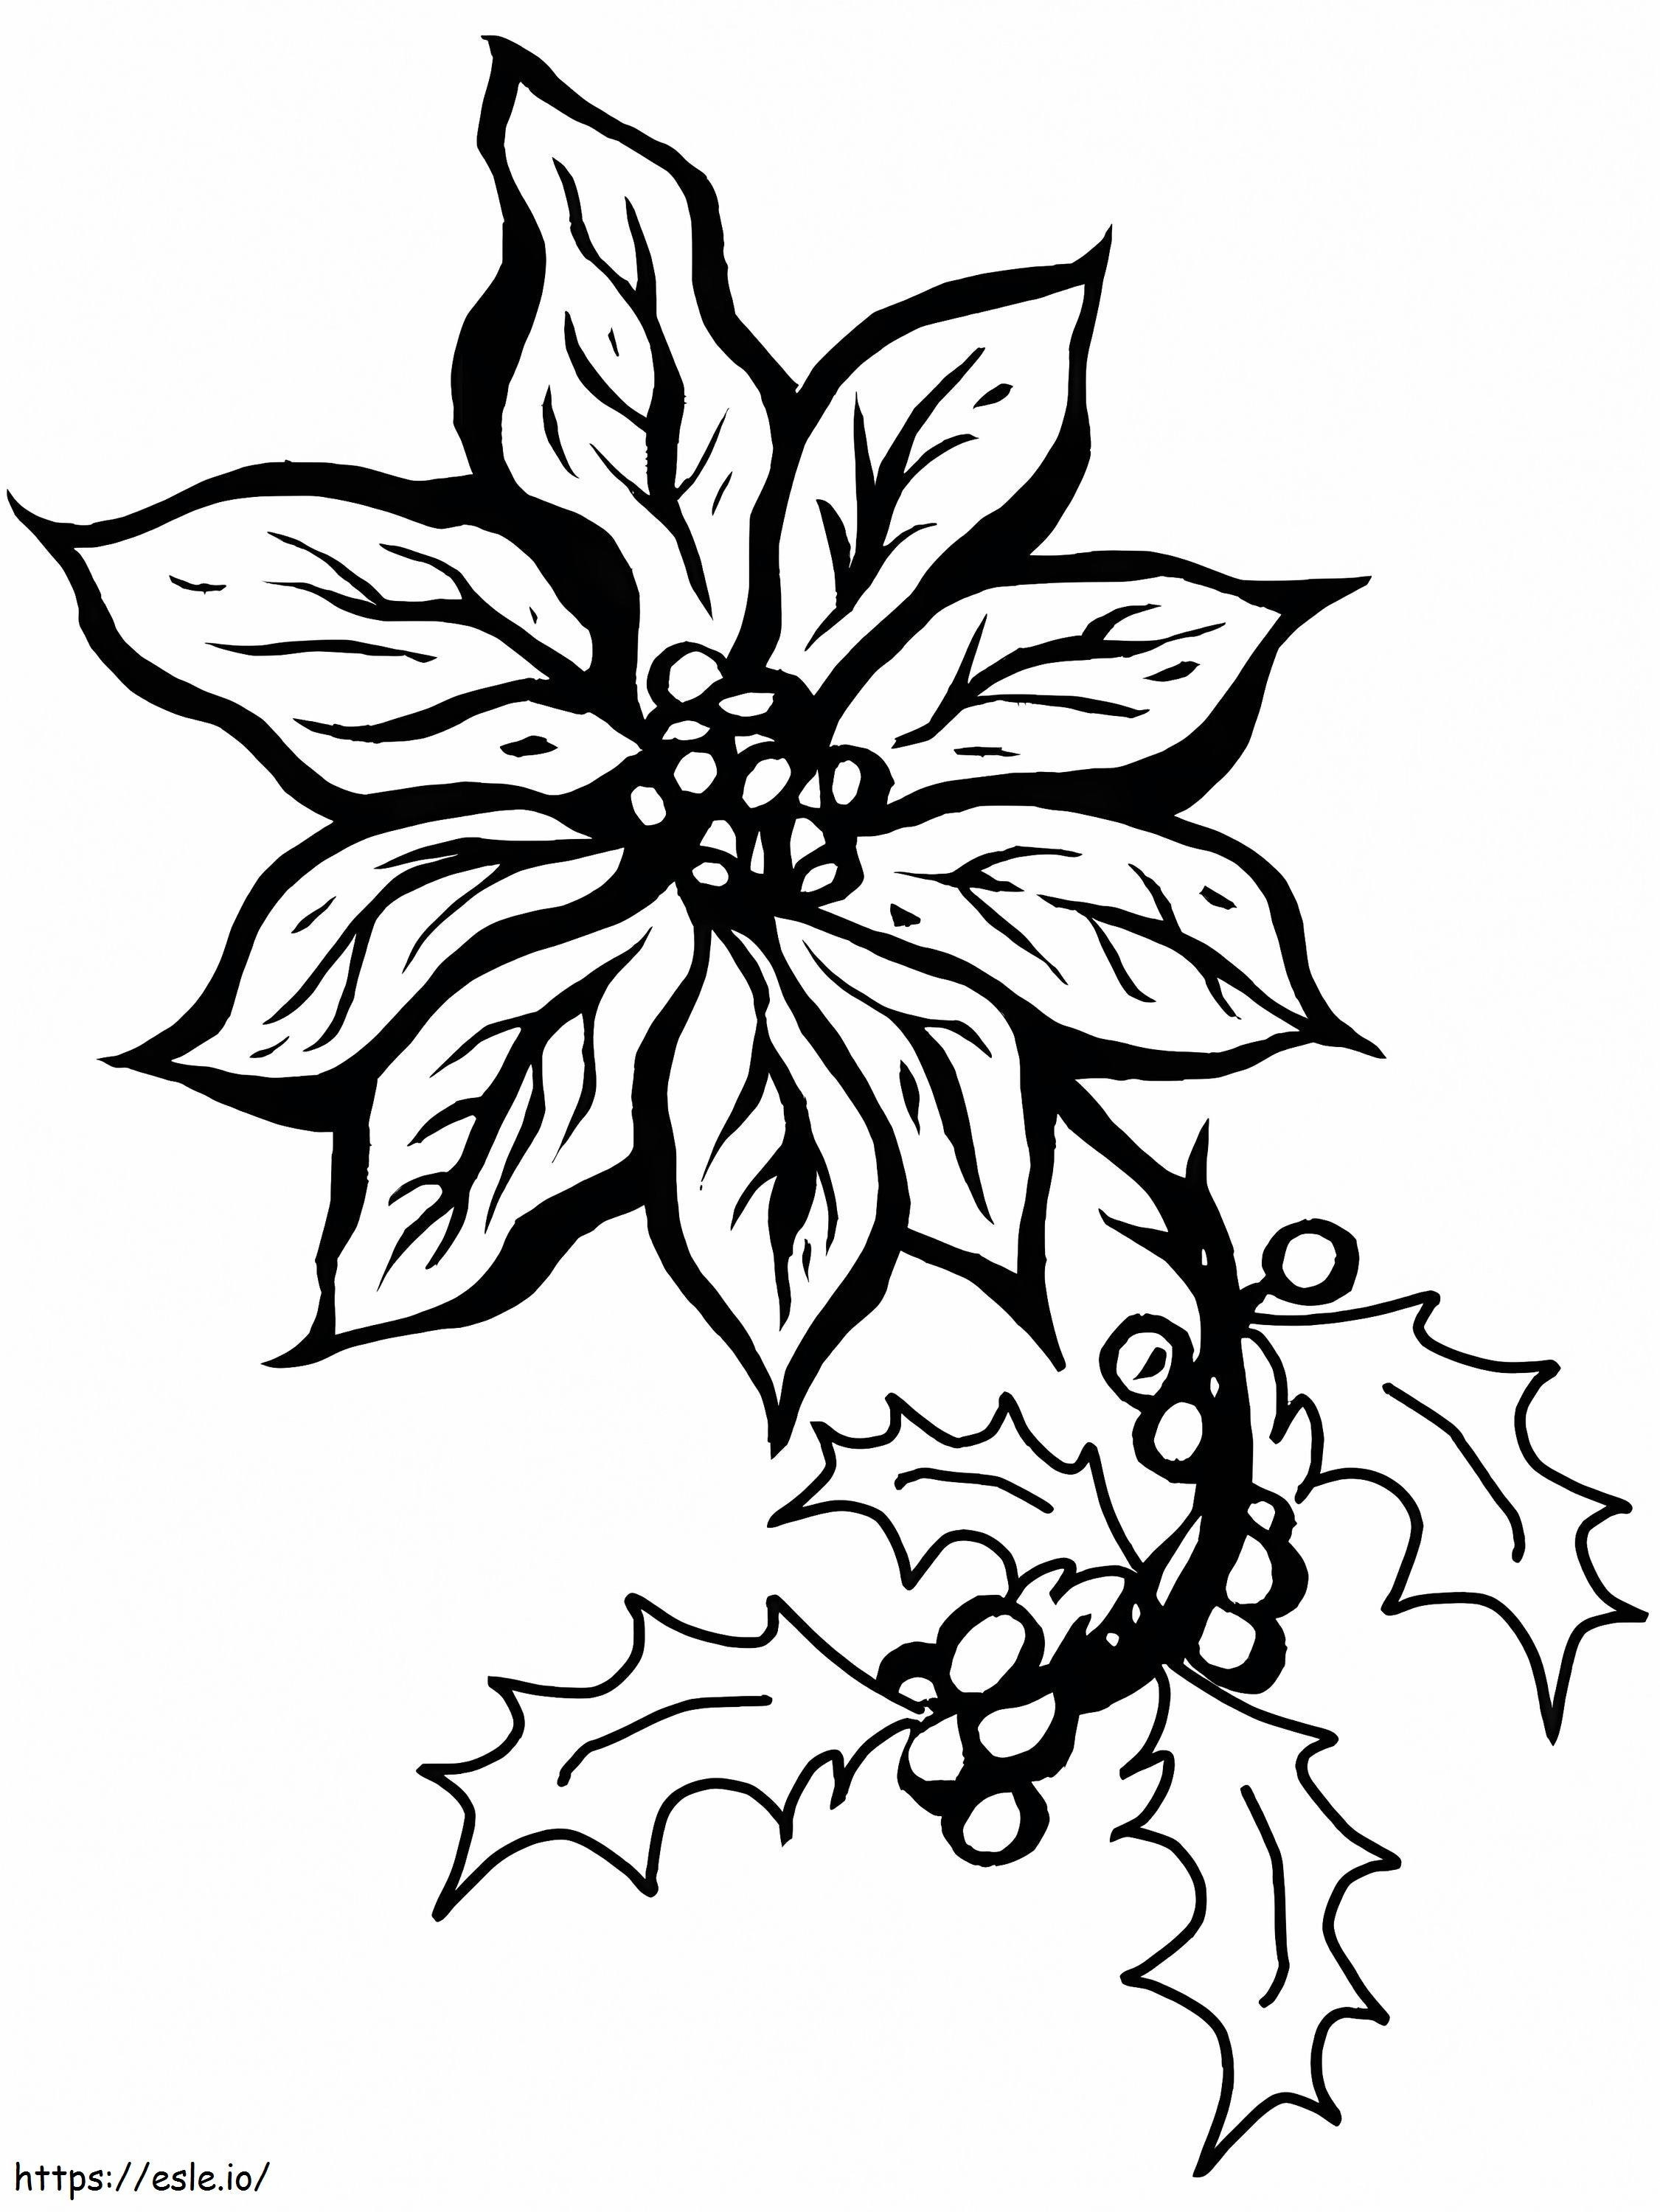 Coloriage Poinsettia unique à imprimer dessin